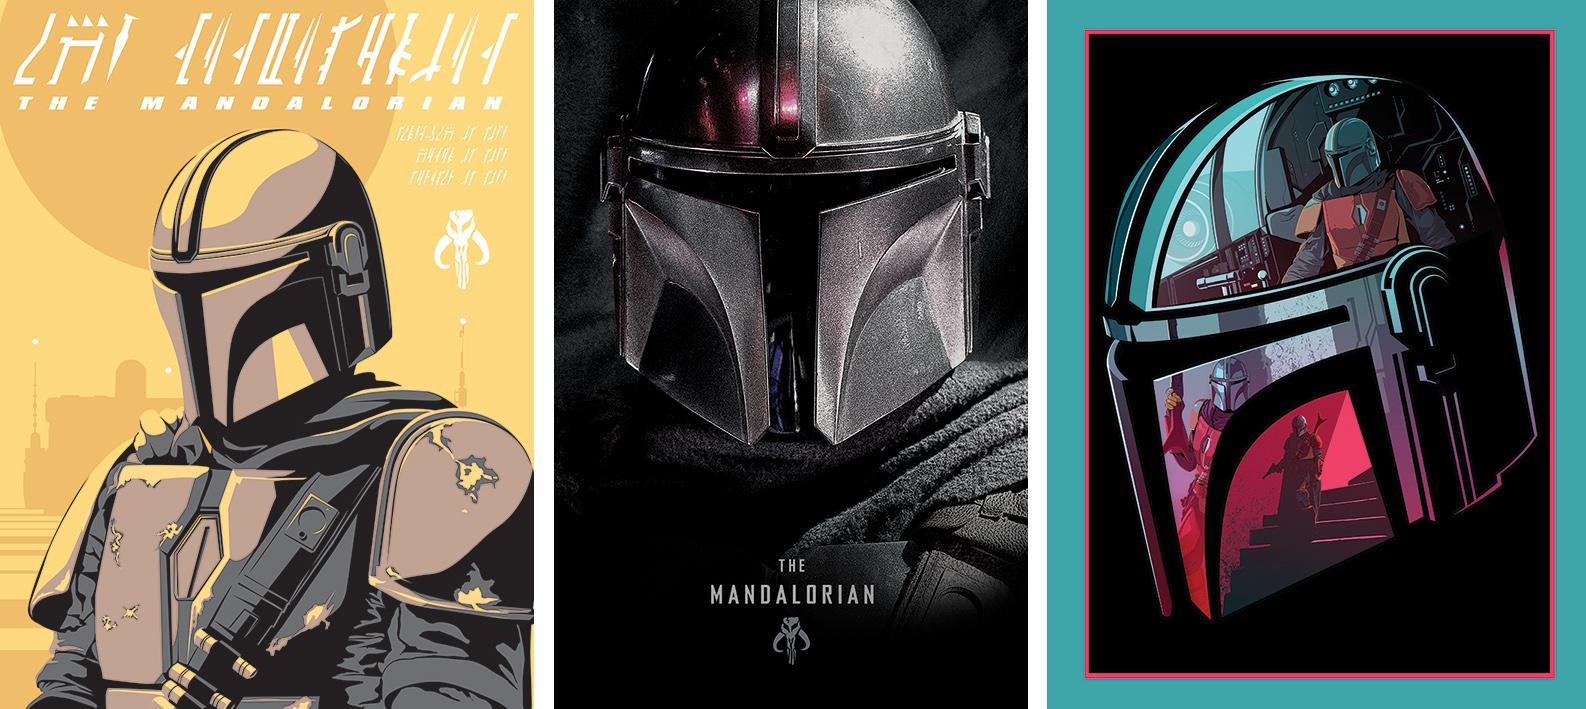 NEW Star Wars: The Mandalorian Poster Art